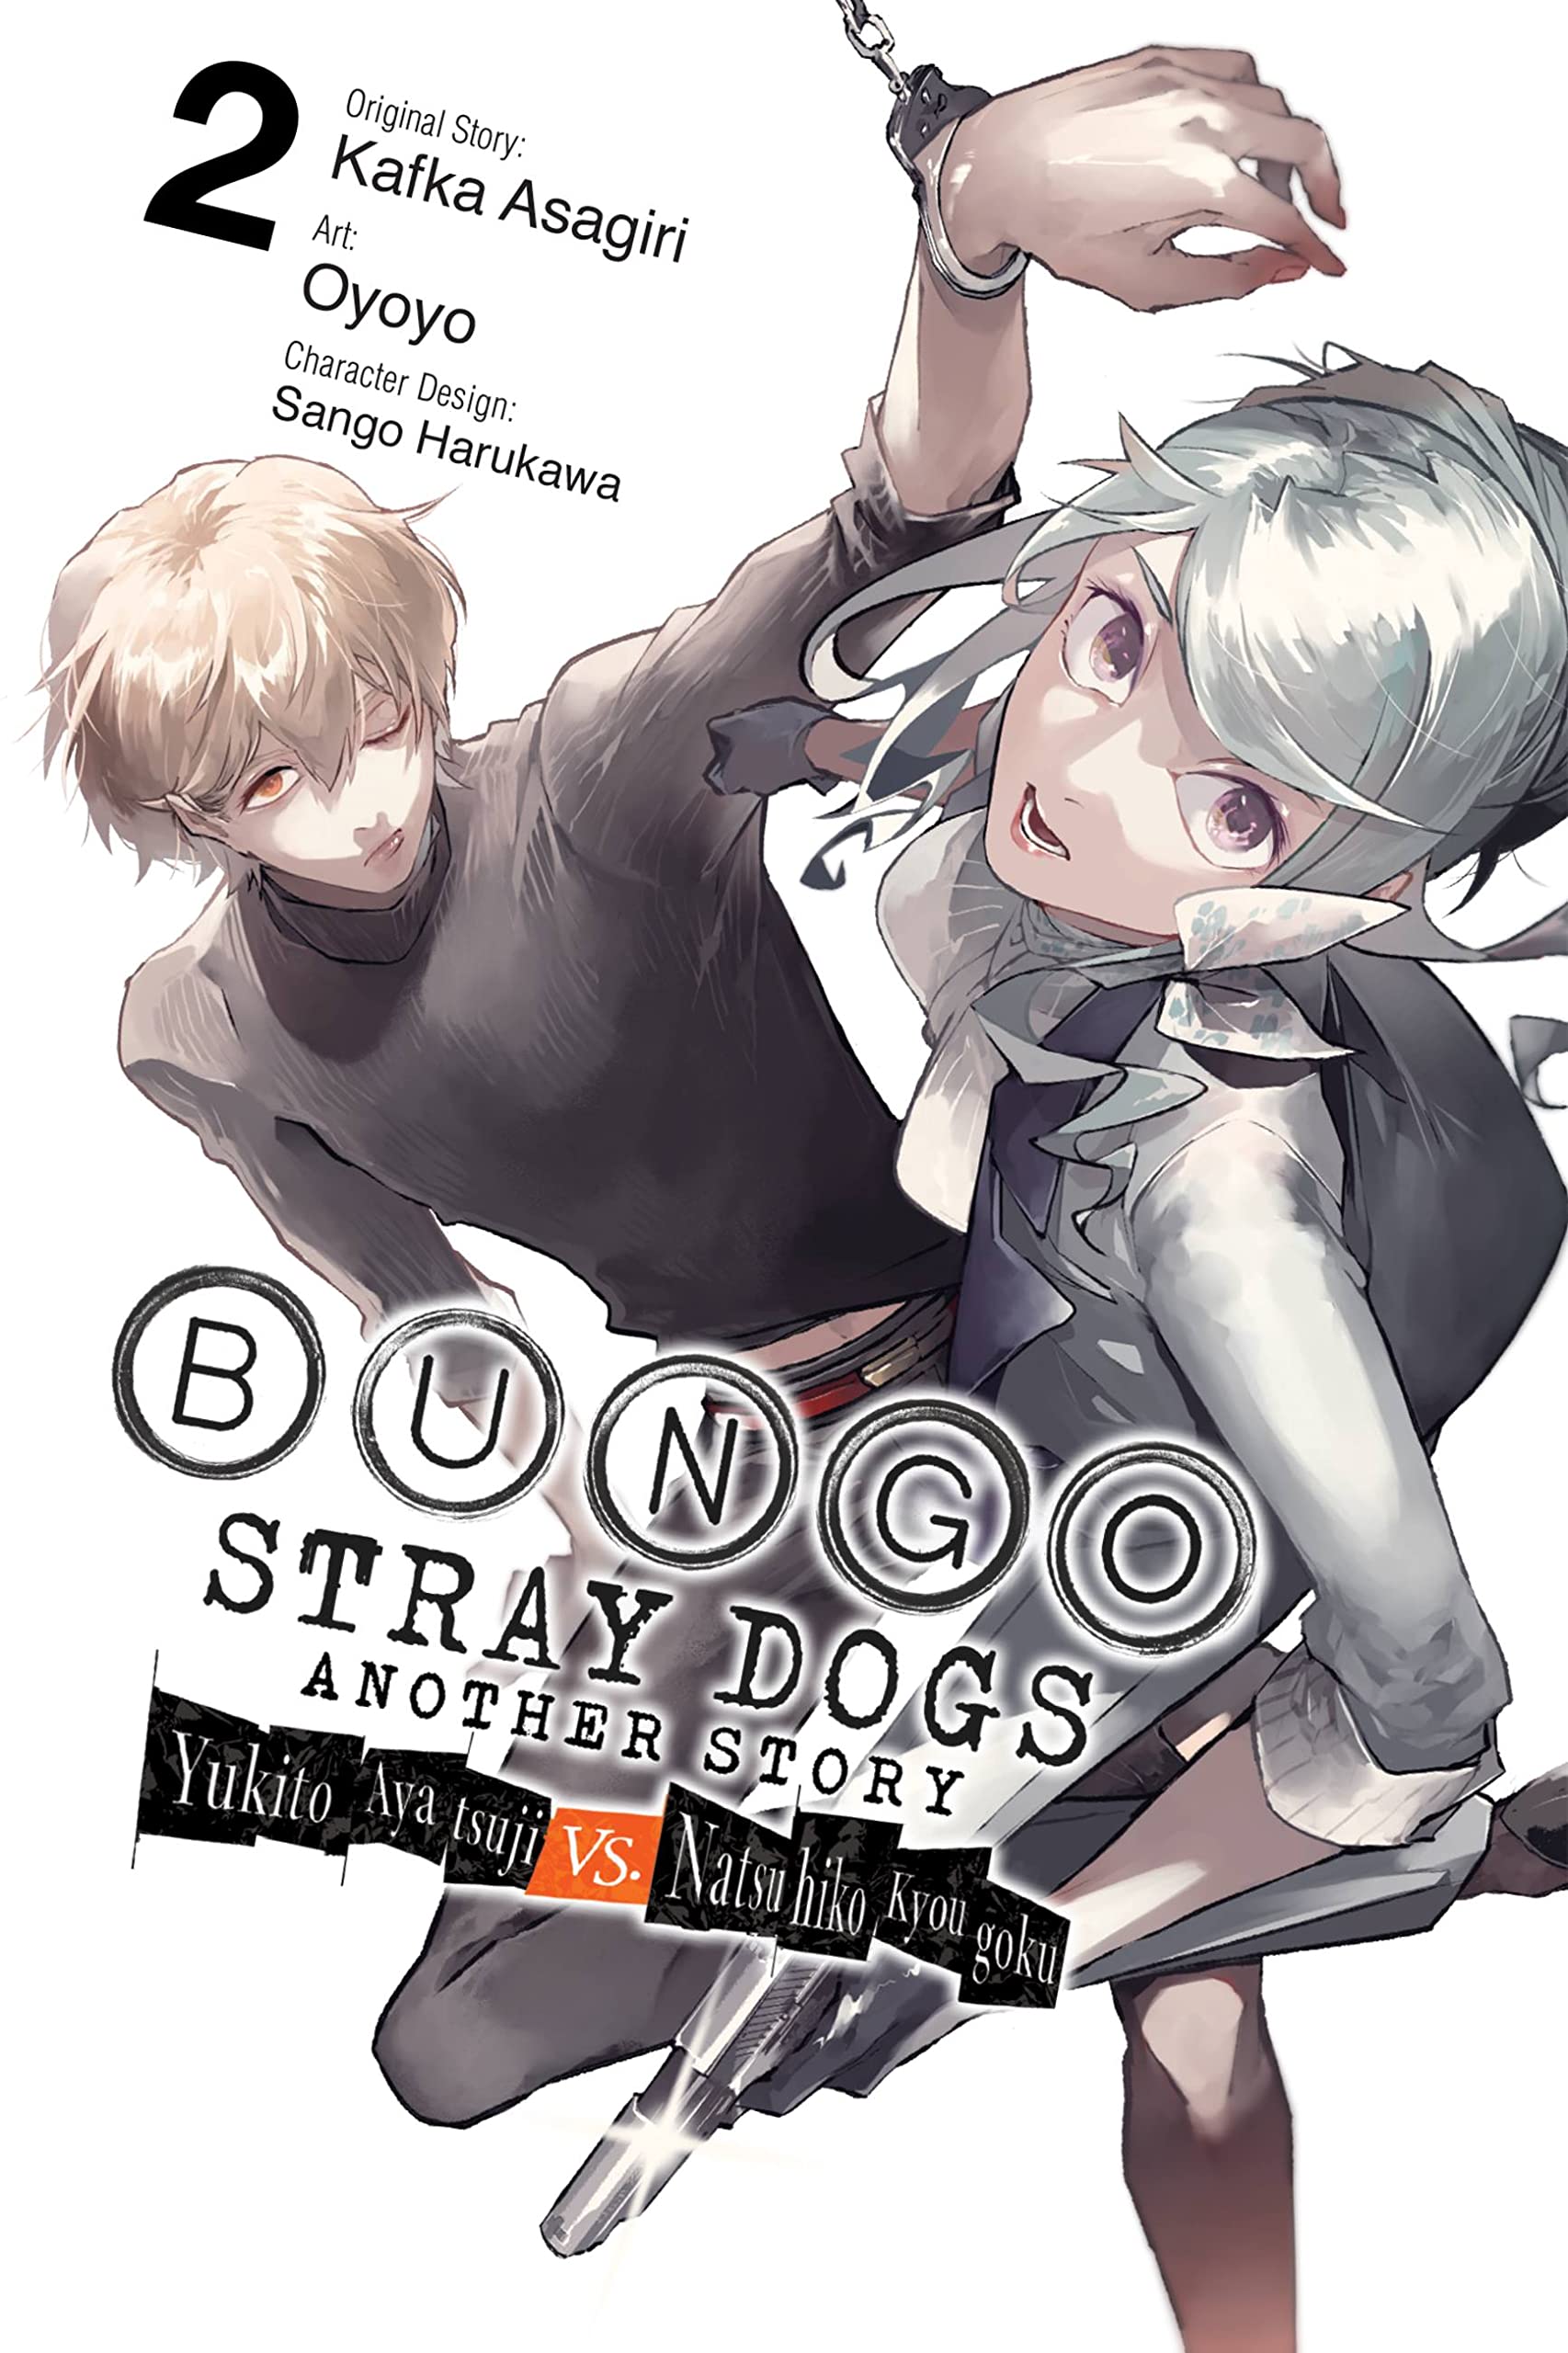 Bungo Stray Dogs: Another Story - Volume 2 | Kafka Asagiri